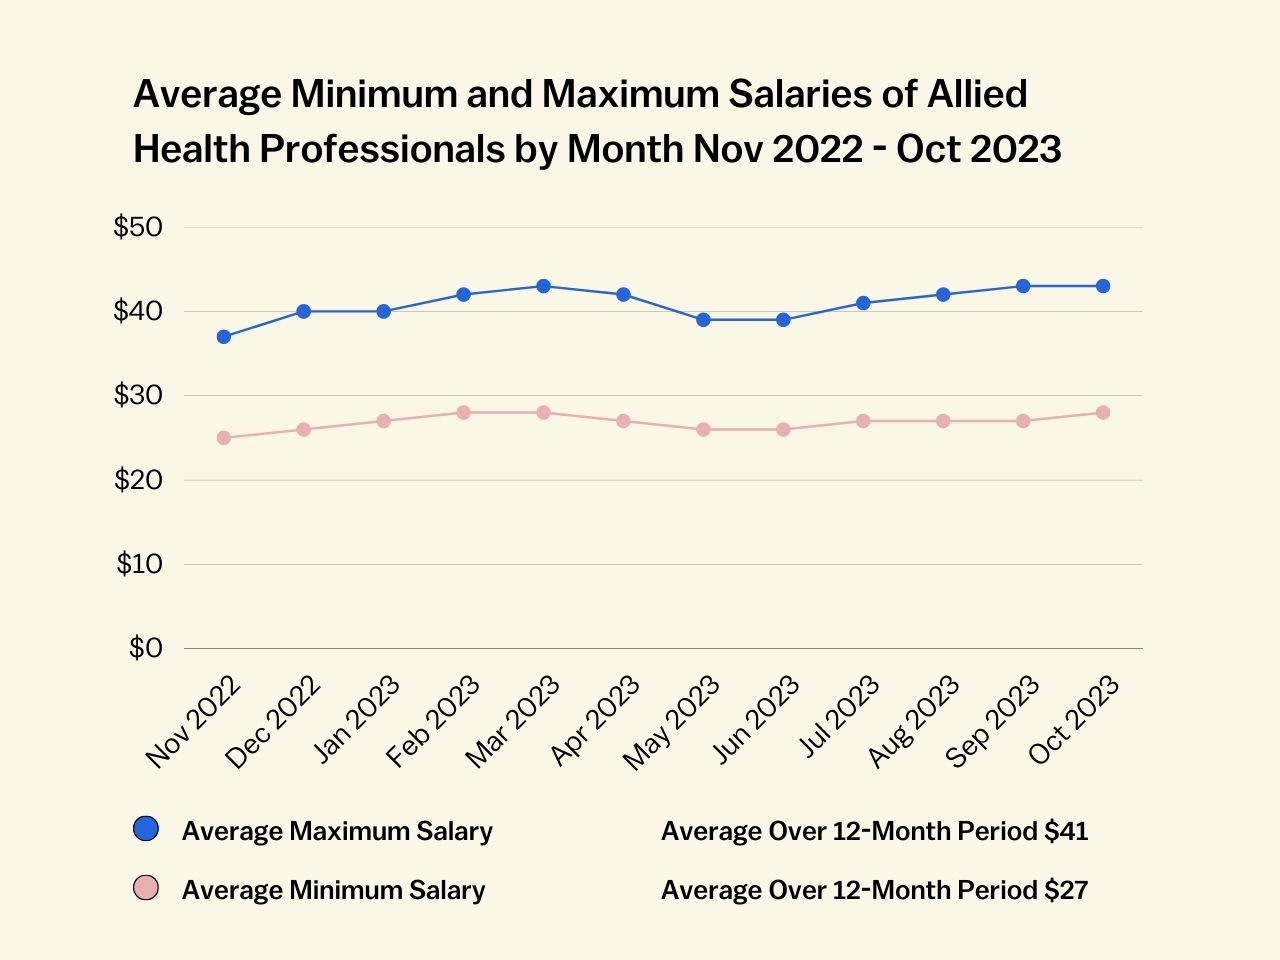 Avg Min & Max Allied Health Salaries Nov 22 - Oct 23